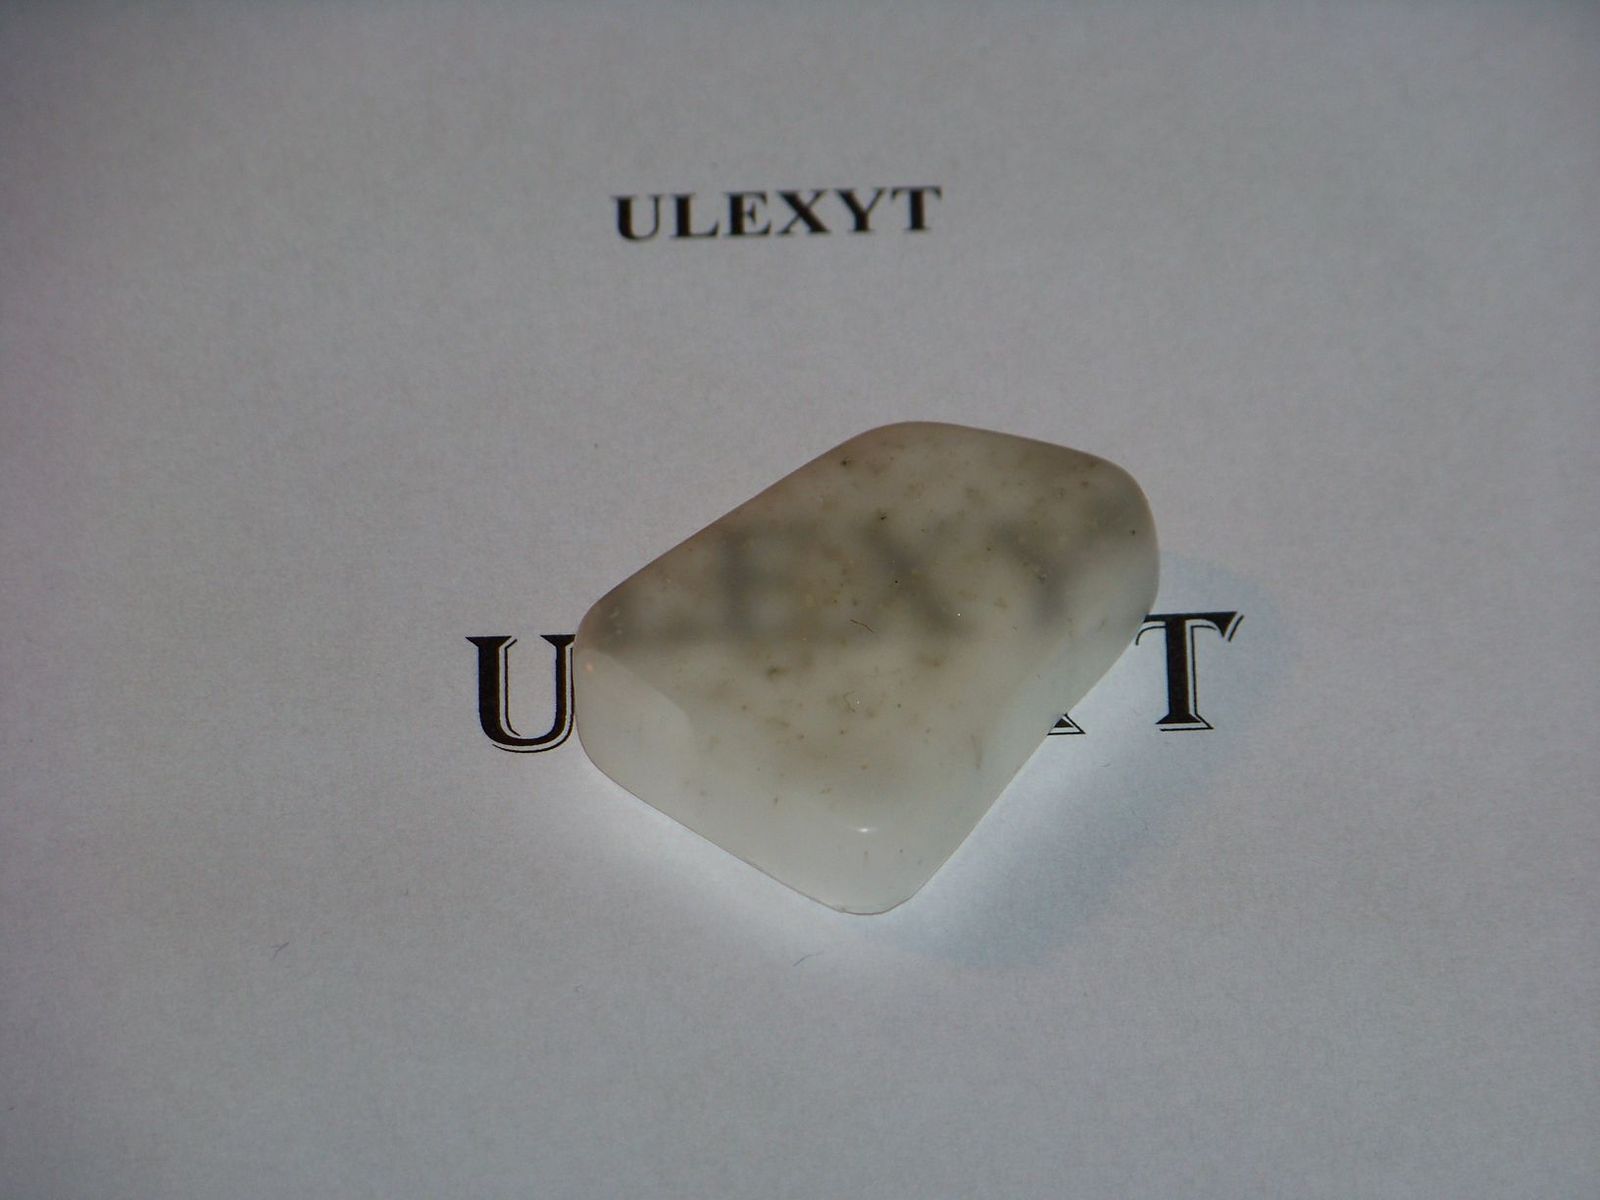 Polished ulexite demonstrating image transmission